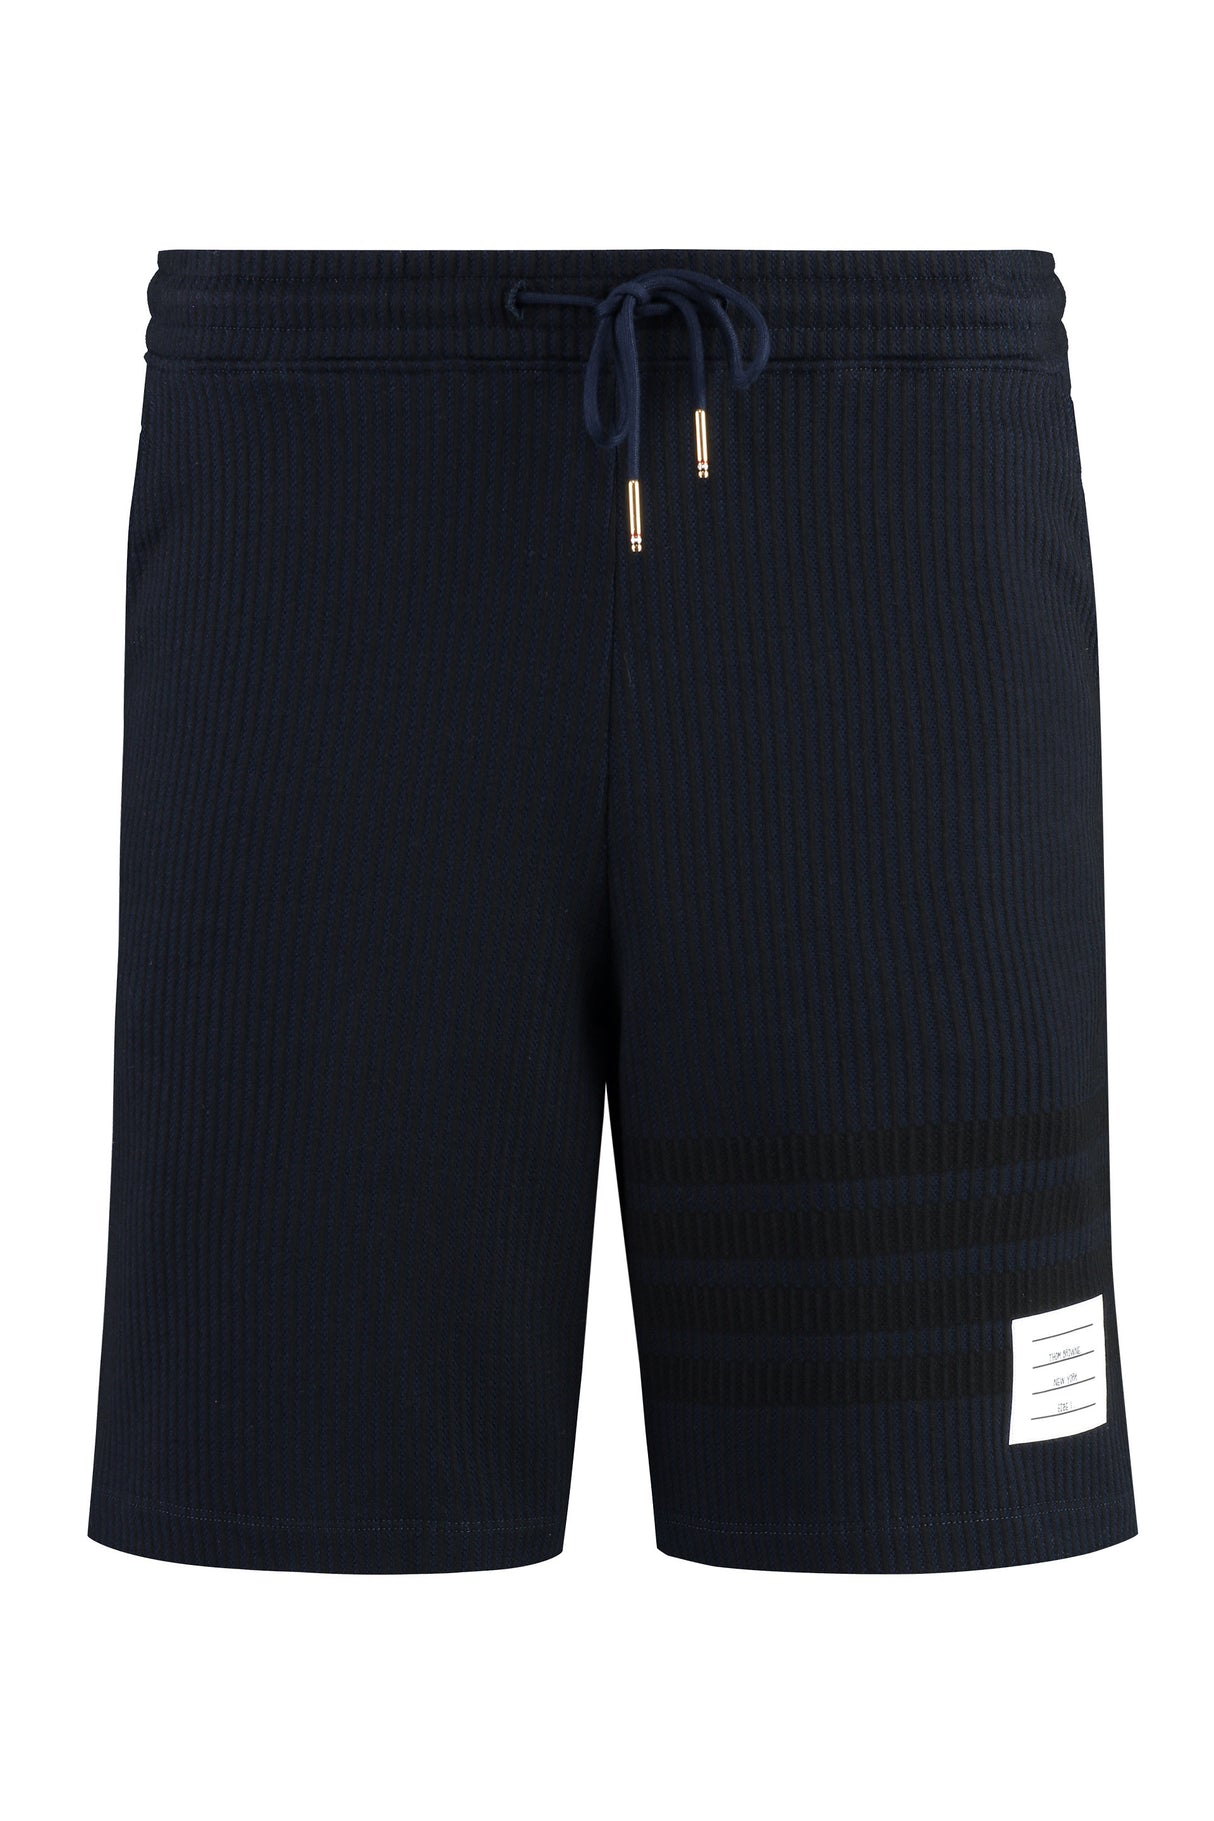 Blue Cotton Bermuda Shorts for Men - SS23コレクション